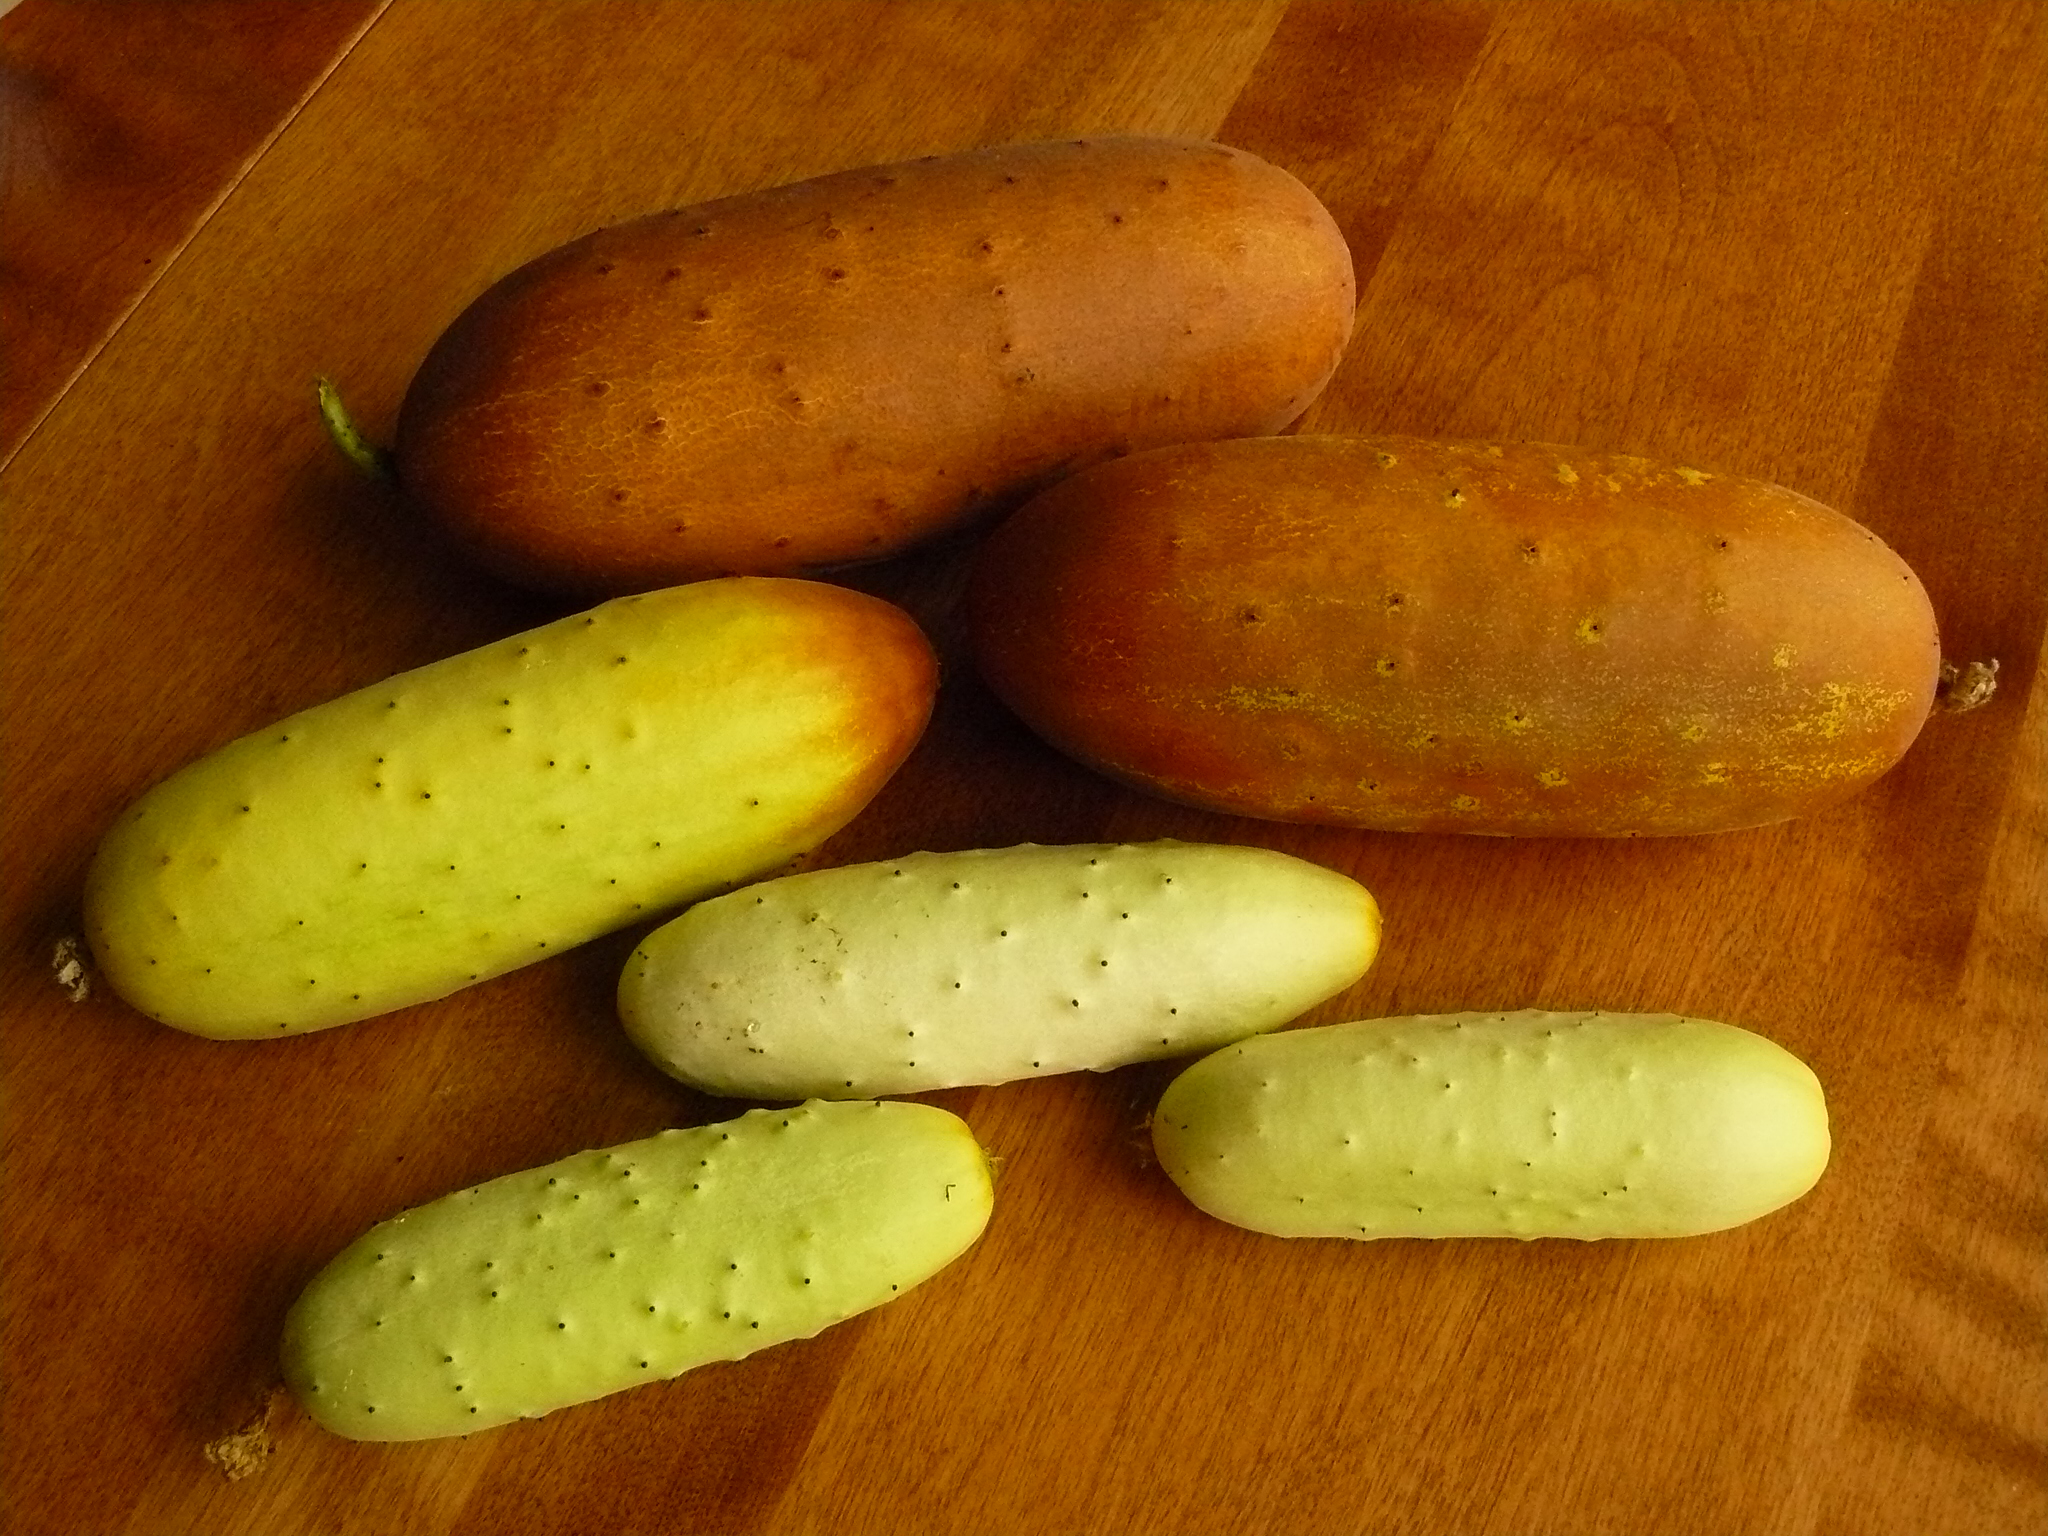 Poona Kheera Cucumber Seeds